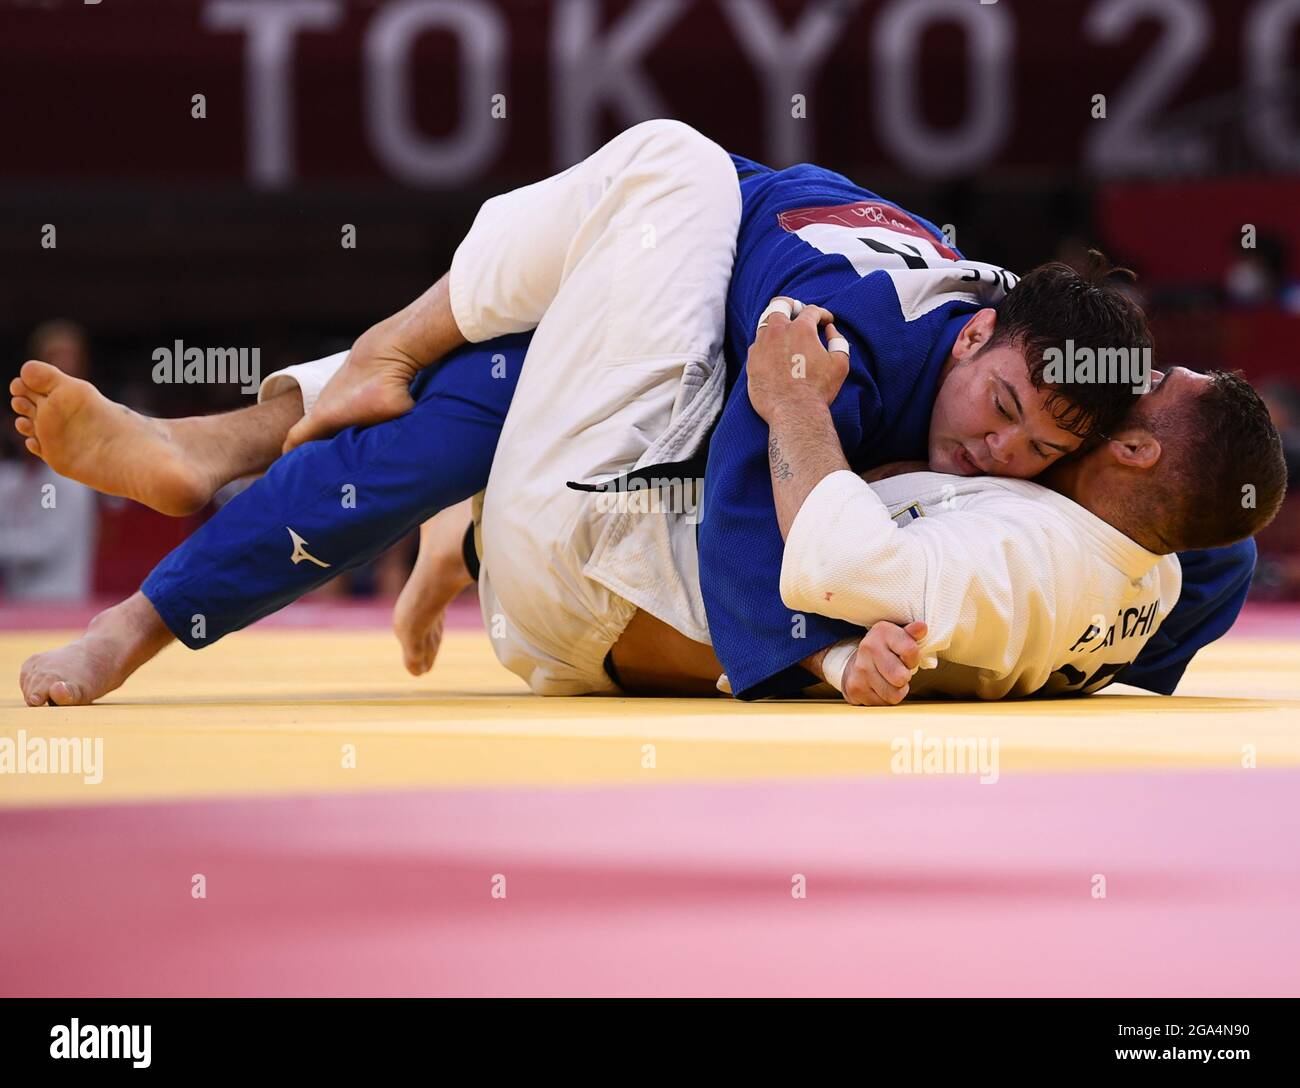 Tokyo 2020 Olympics - Judo - Men's 100kg - Quarterfinal - Nippon Budokan - Tokyo, Japan - July 29, 2021. Peter Paltchik of Israel in action against Aaron Wolf of Japan. REUTERS/Annegret Hilse Stock Photo